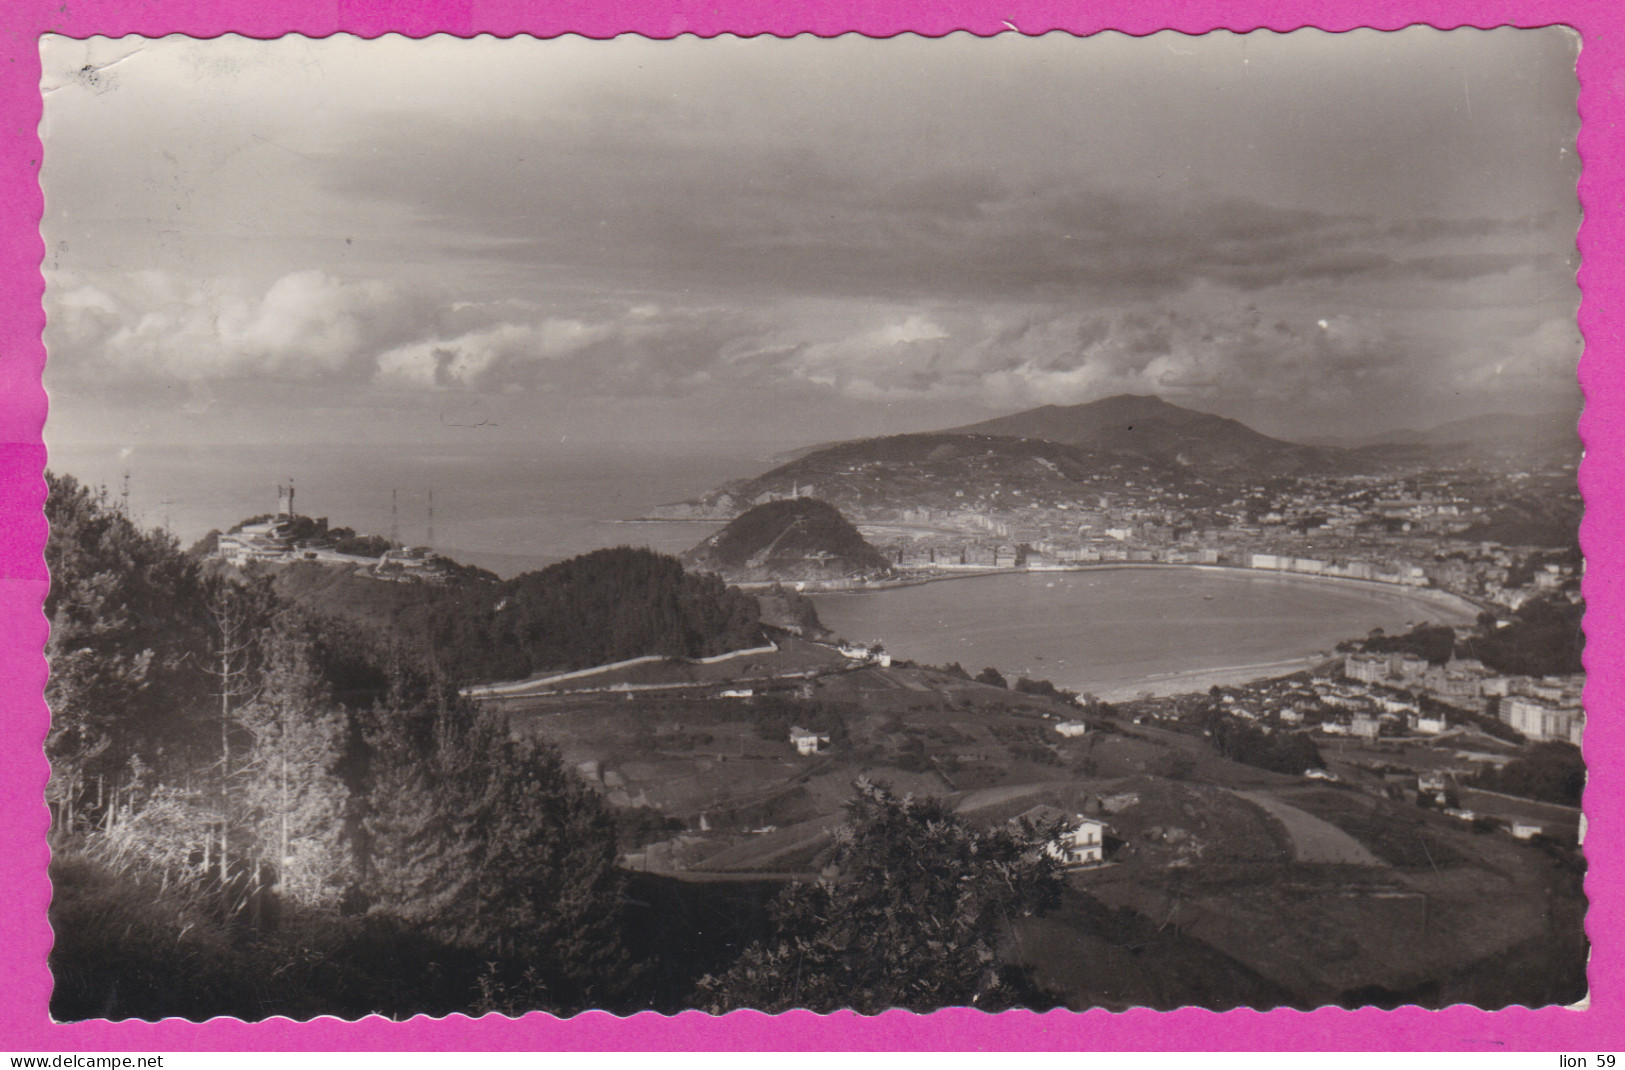 293808 / Spain - San Sebastián Bay Of Biscay  Vista General PC 1961 USED 3 Pta General Francisco Franco , Vera To France - Covers & Documents